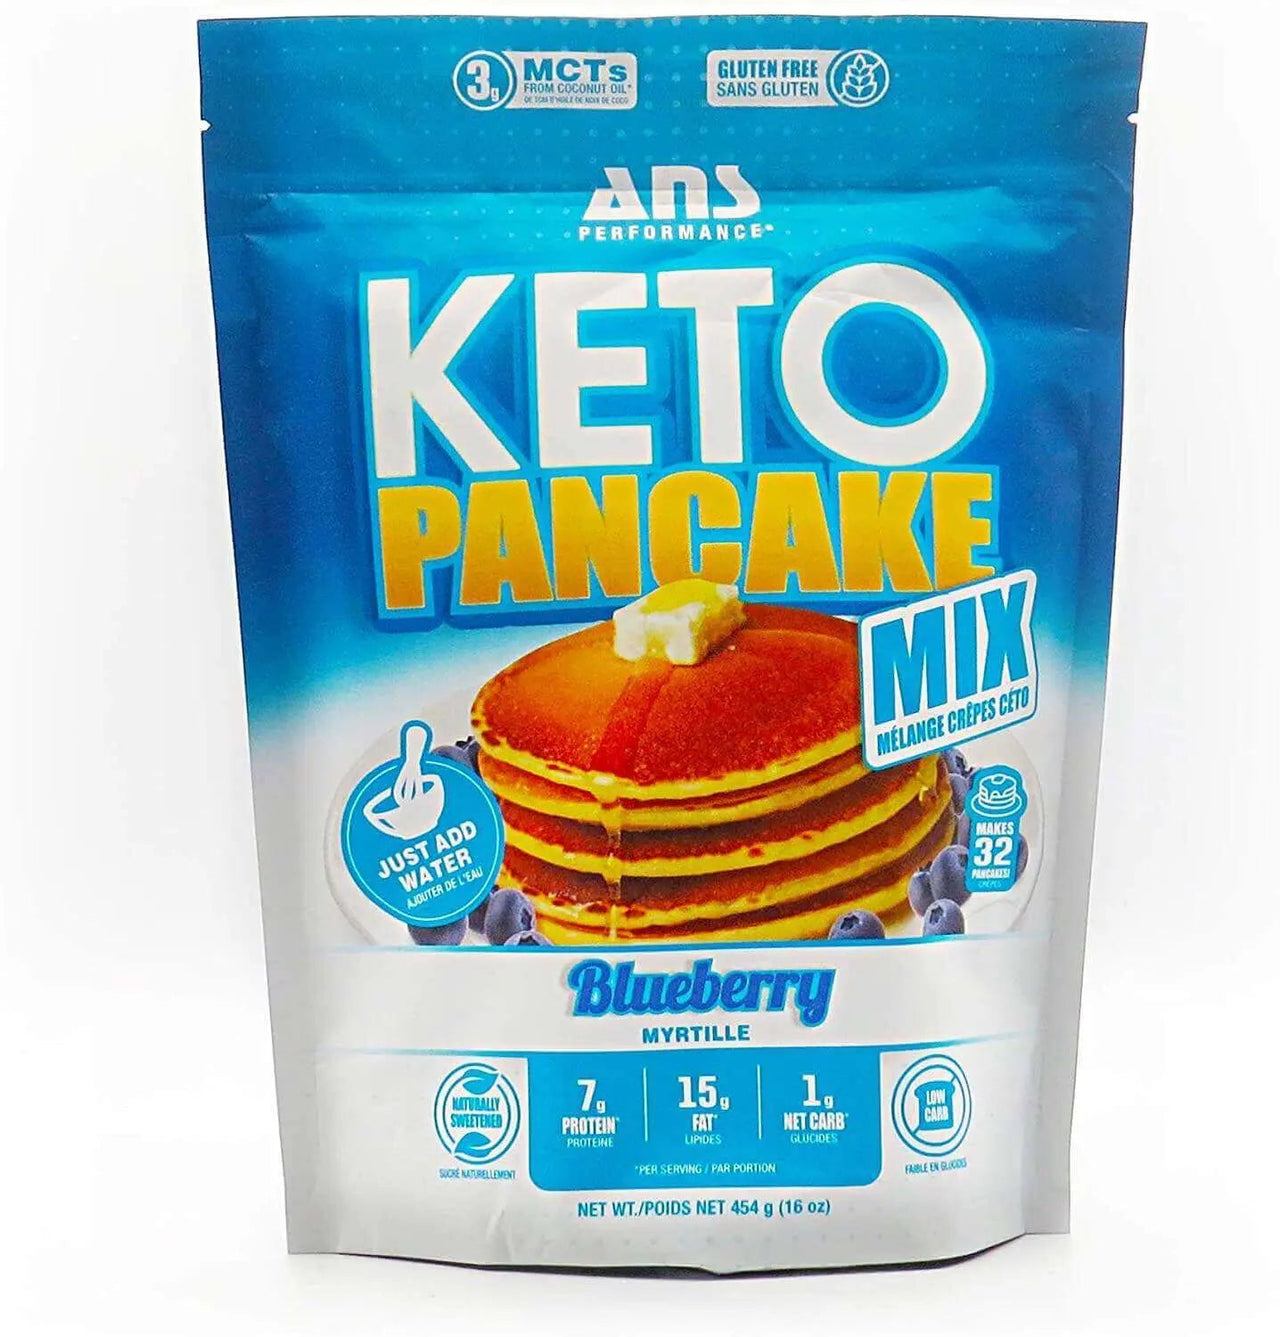 Keto and Co Pancake & Waffle Keto Baking Mix-Gluten Free (One Bag